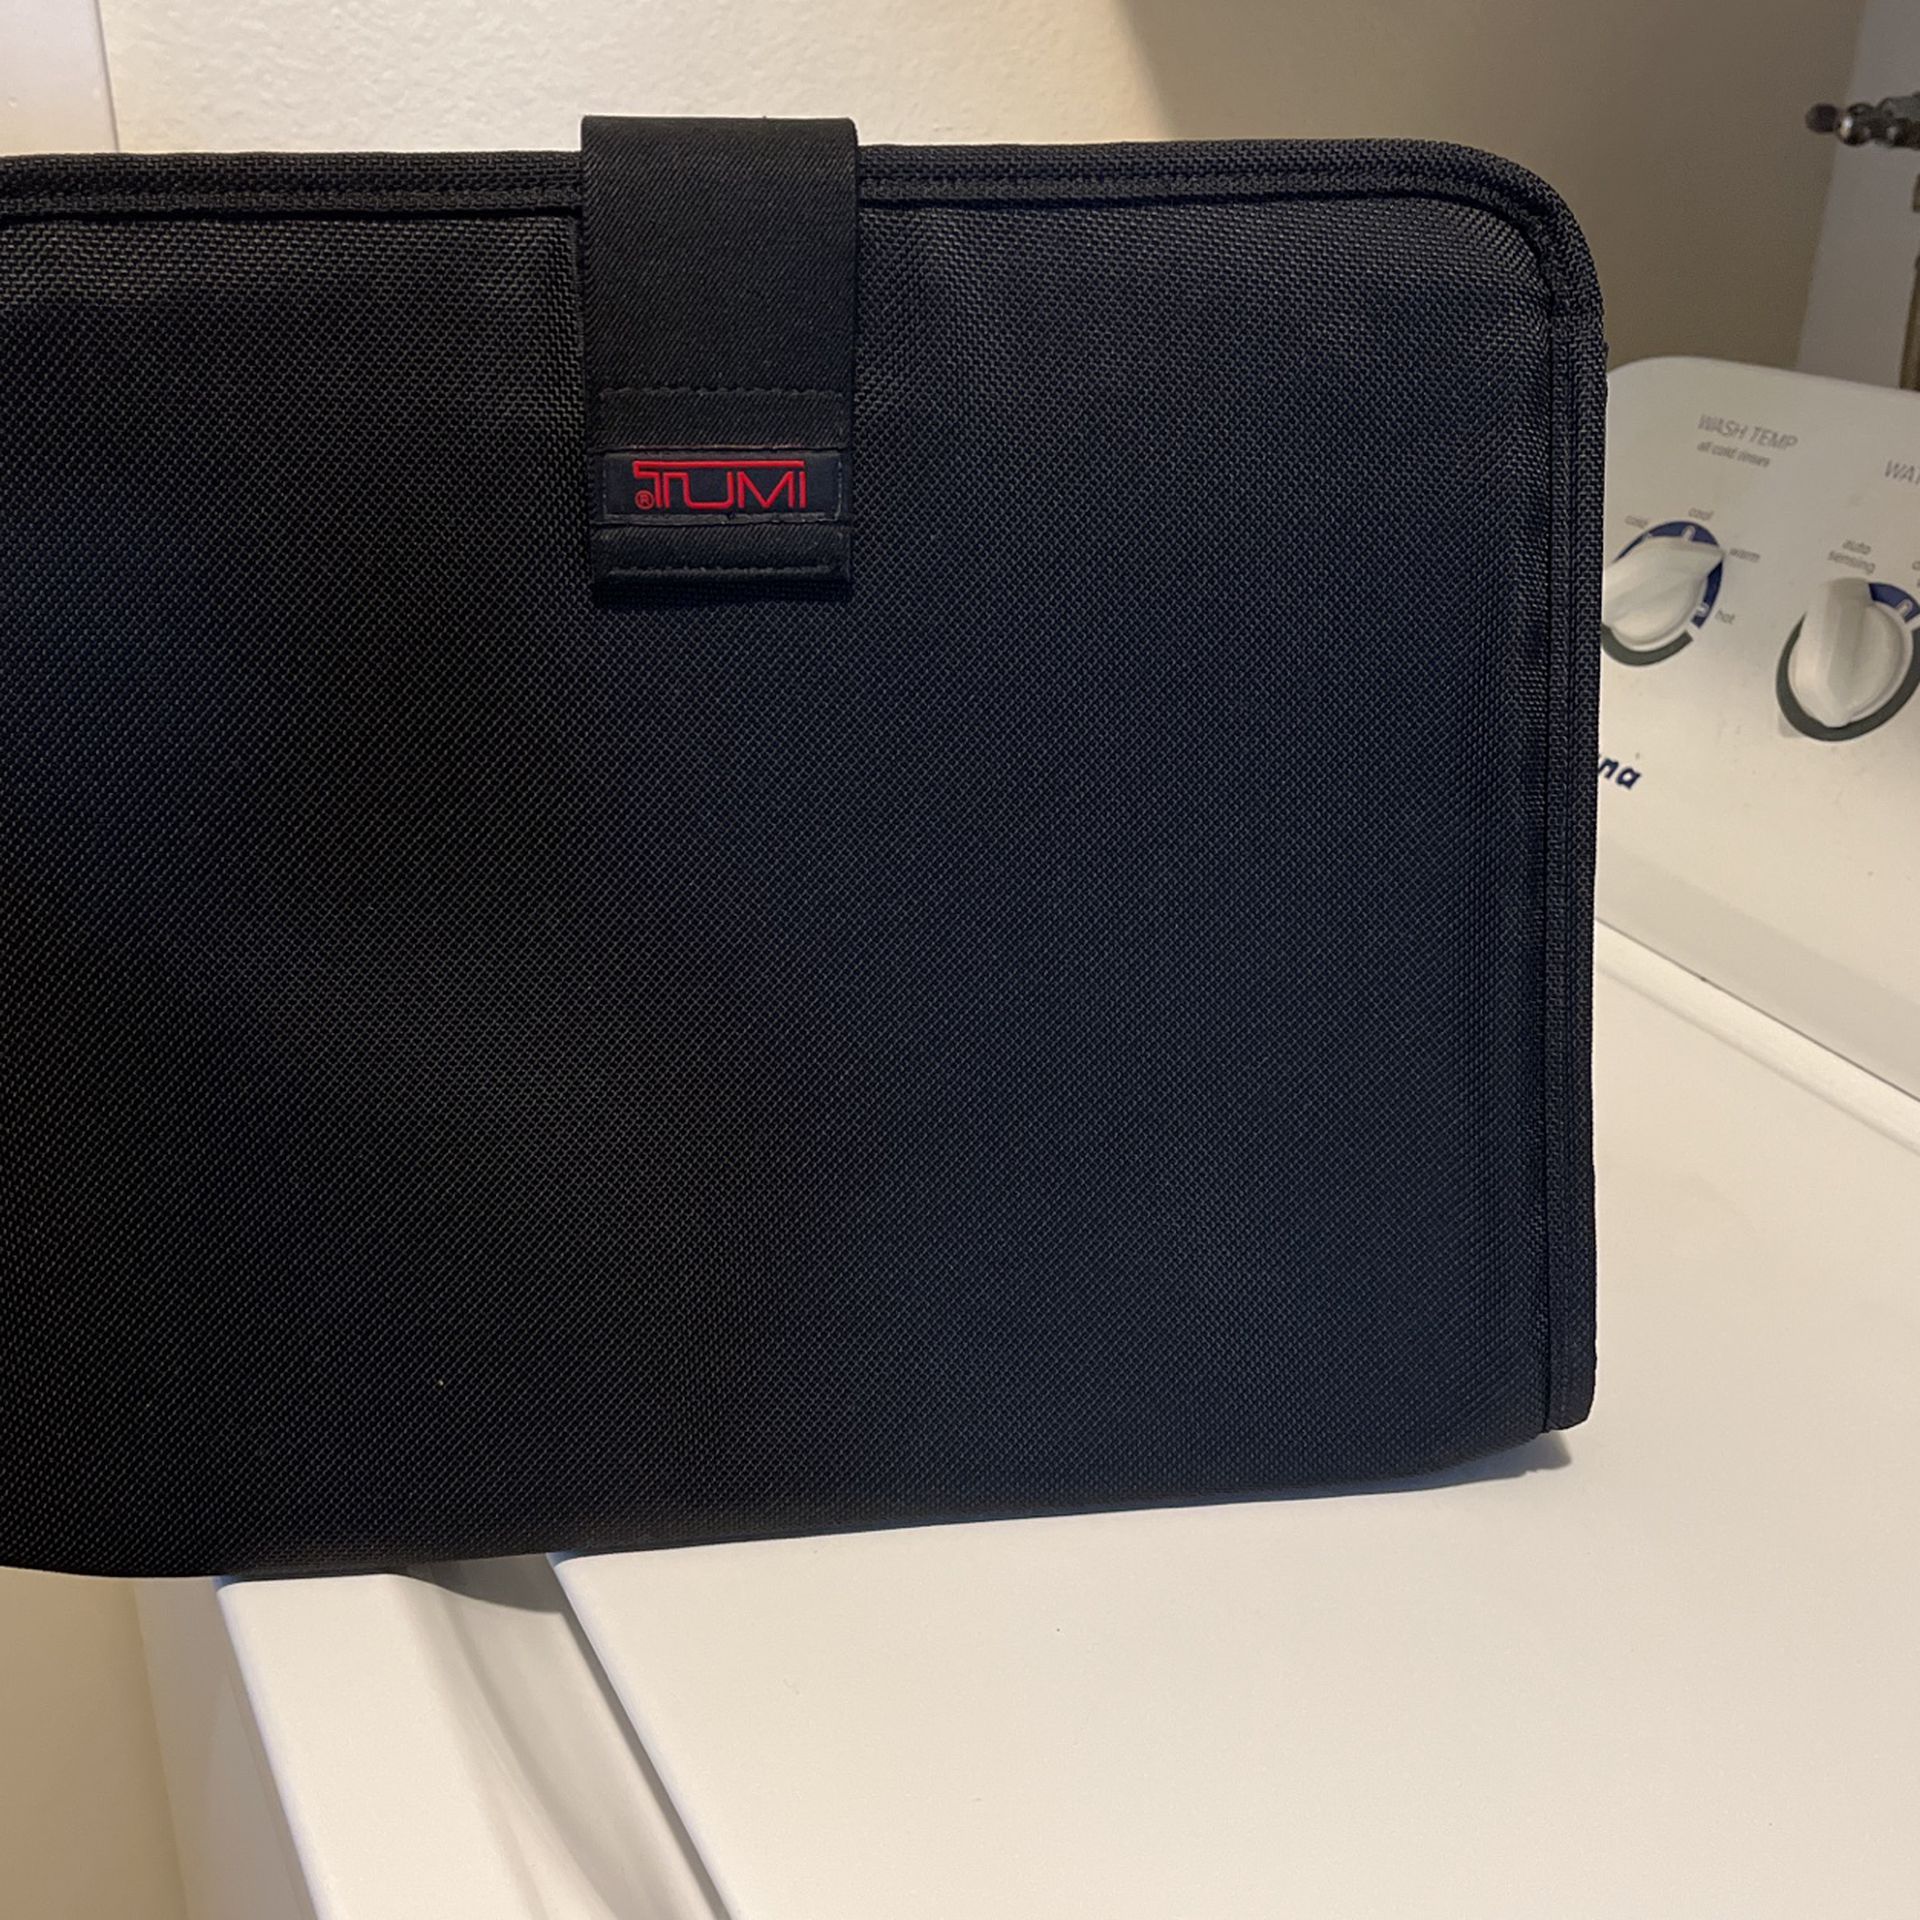 Brand New TUMI laptop Case 